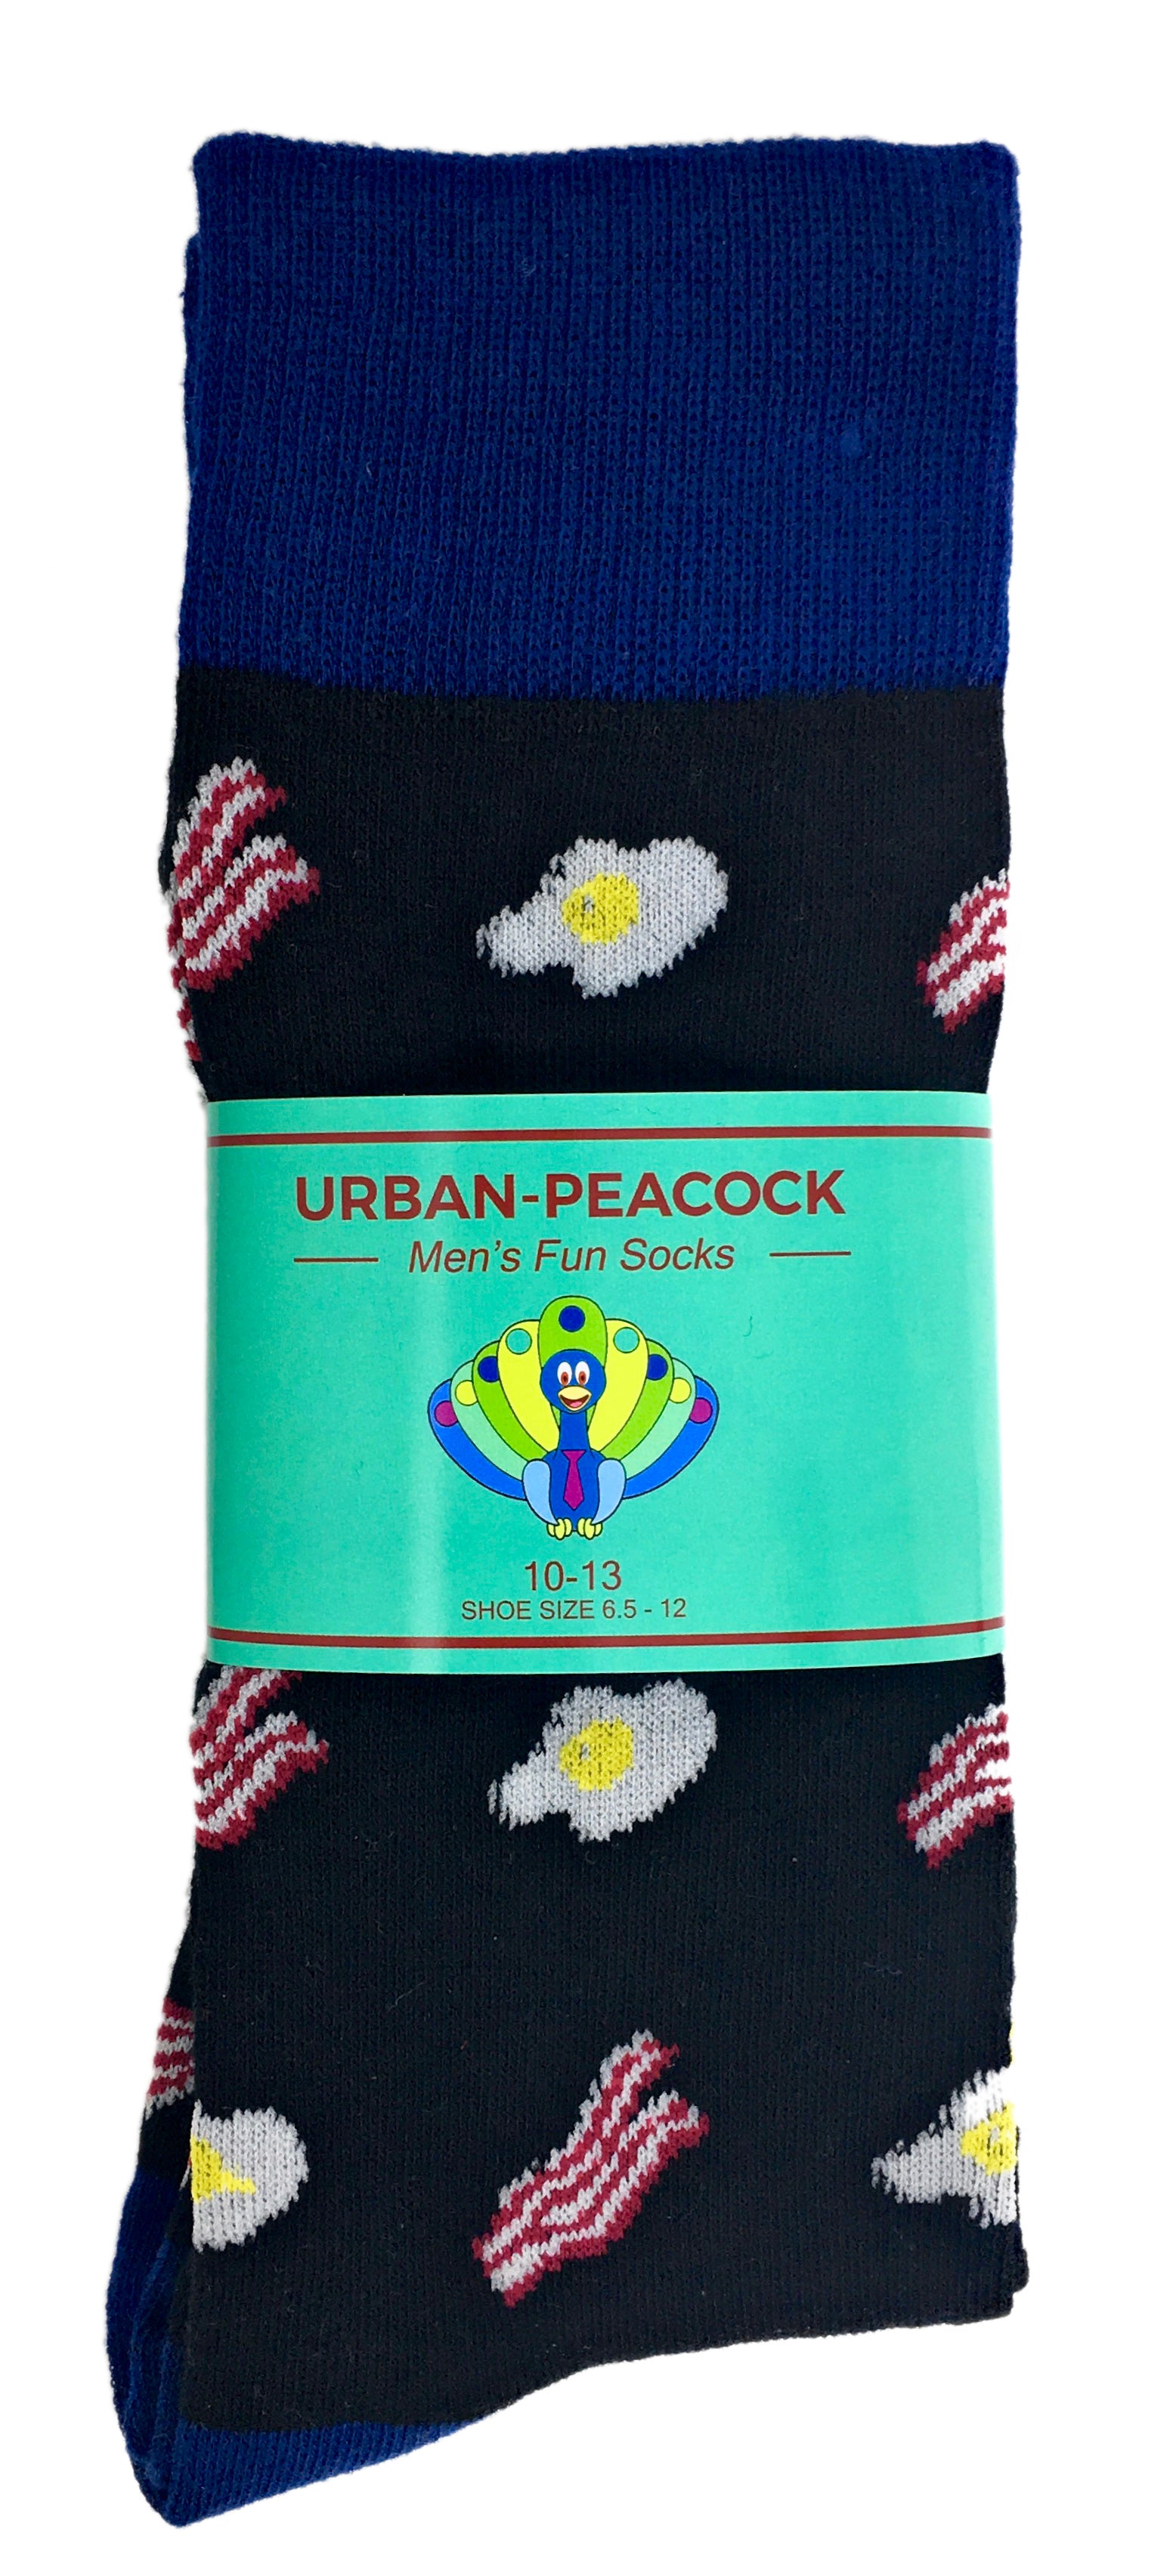 Urban-Peacock Men's Novelty Crew Socks - Bacon & Eggs - Black with Navy